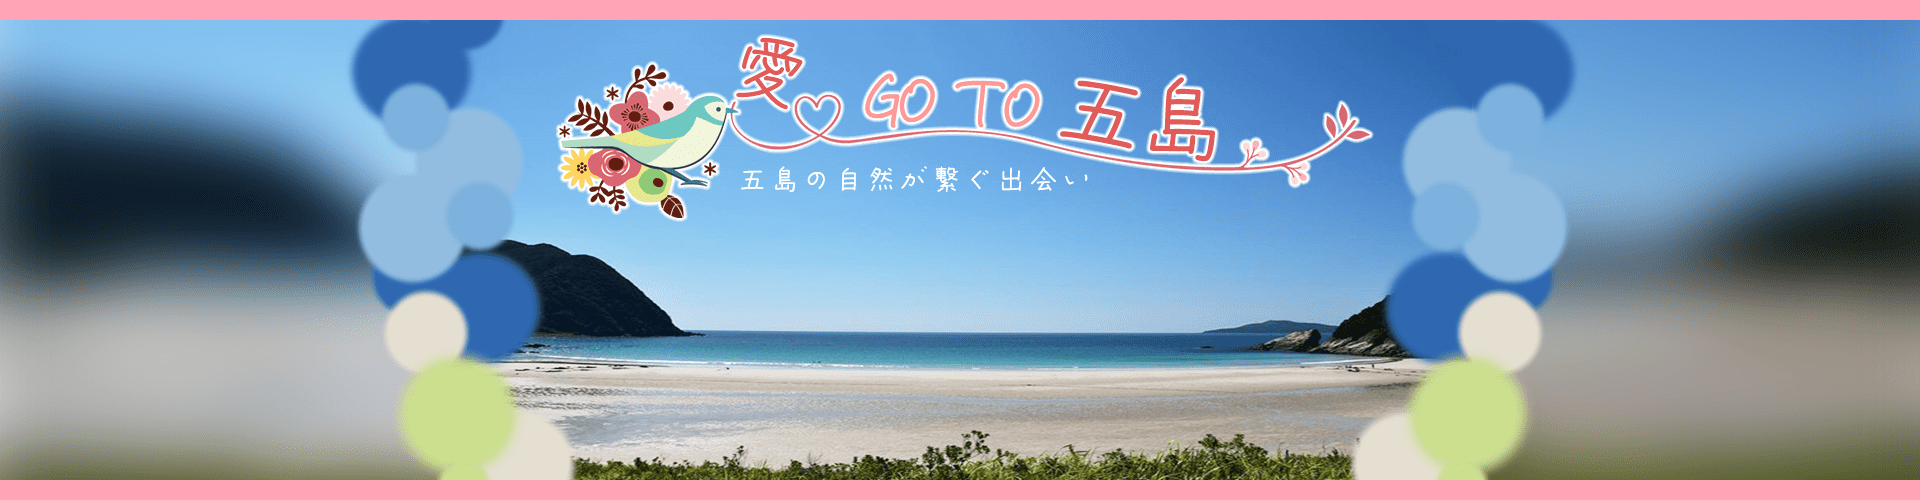 愛 GO TO 五島